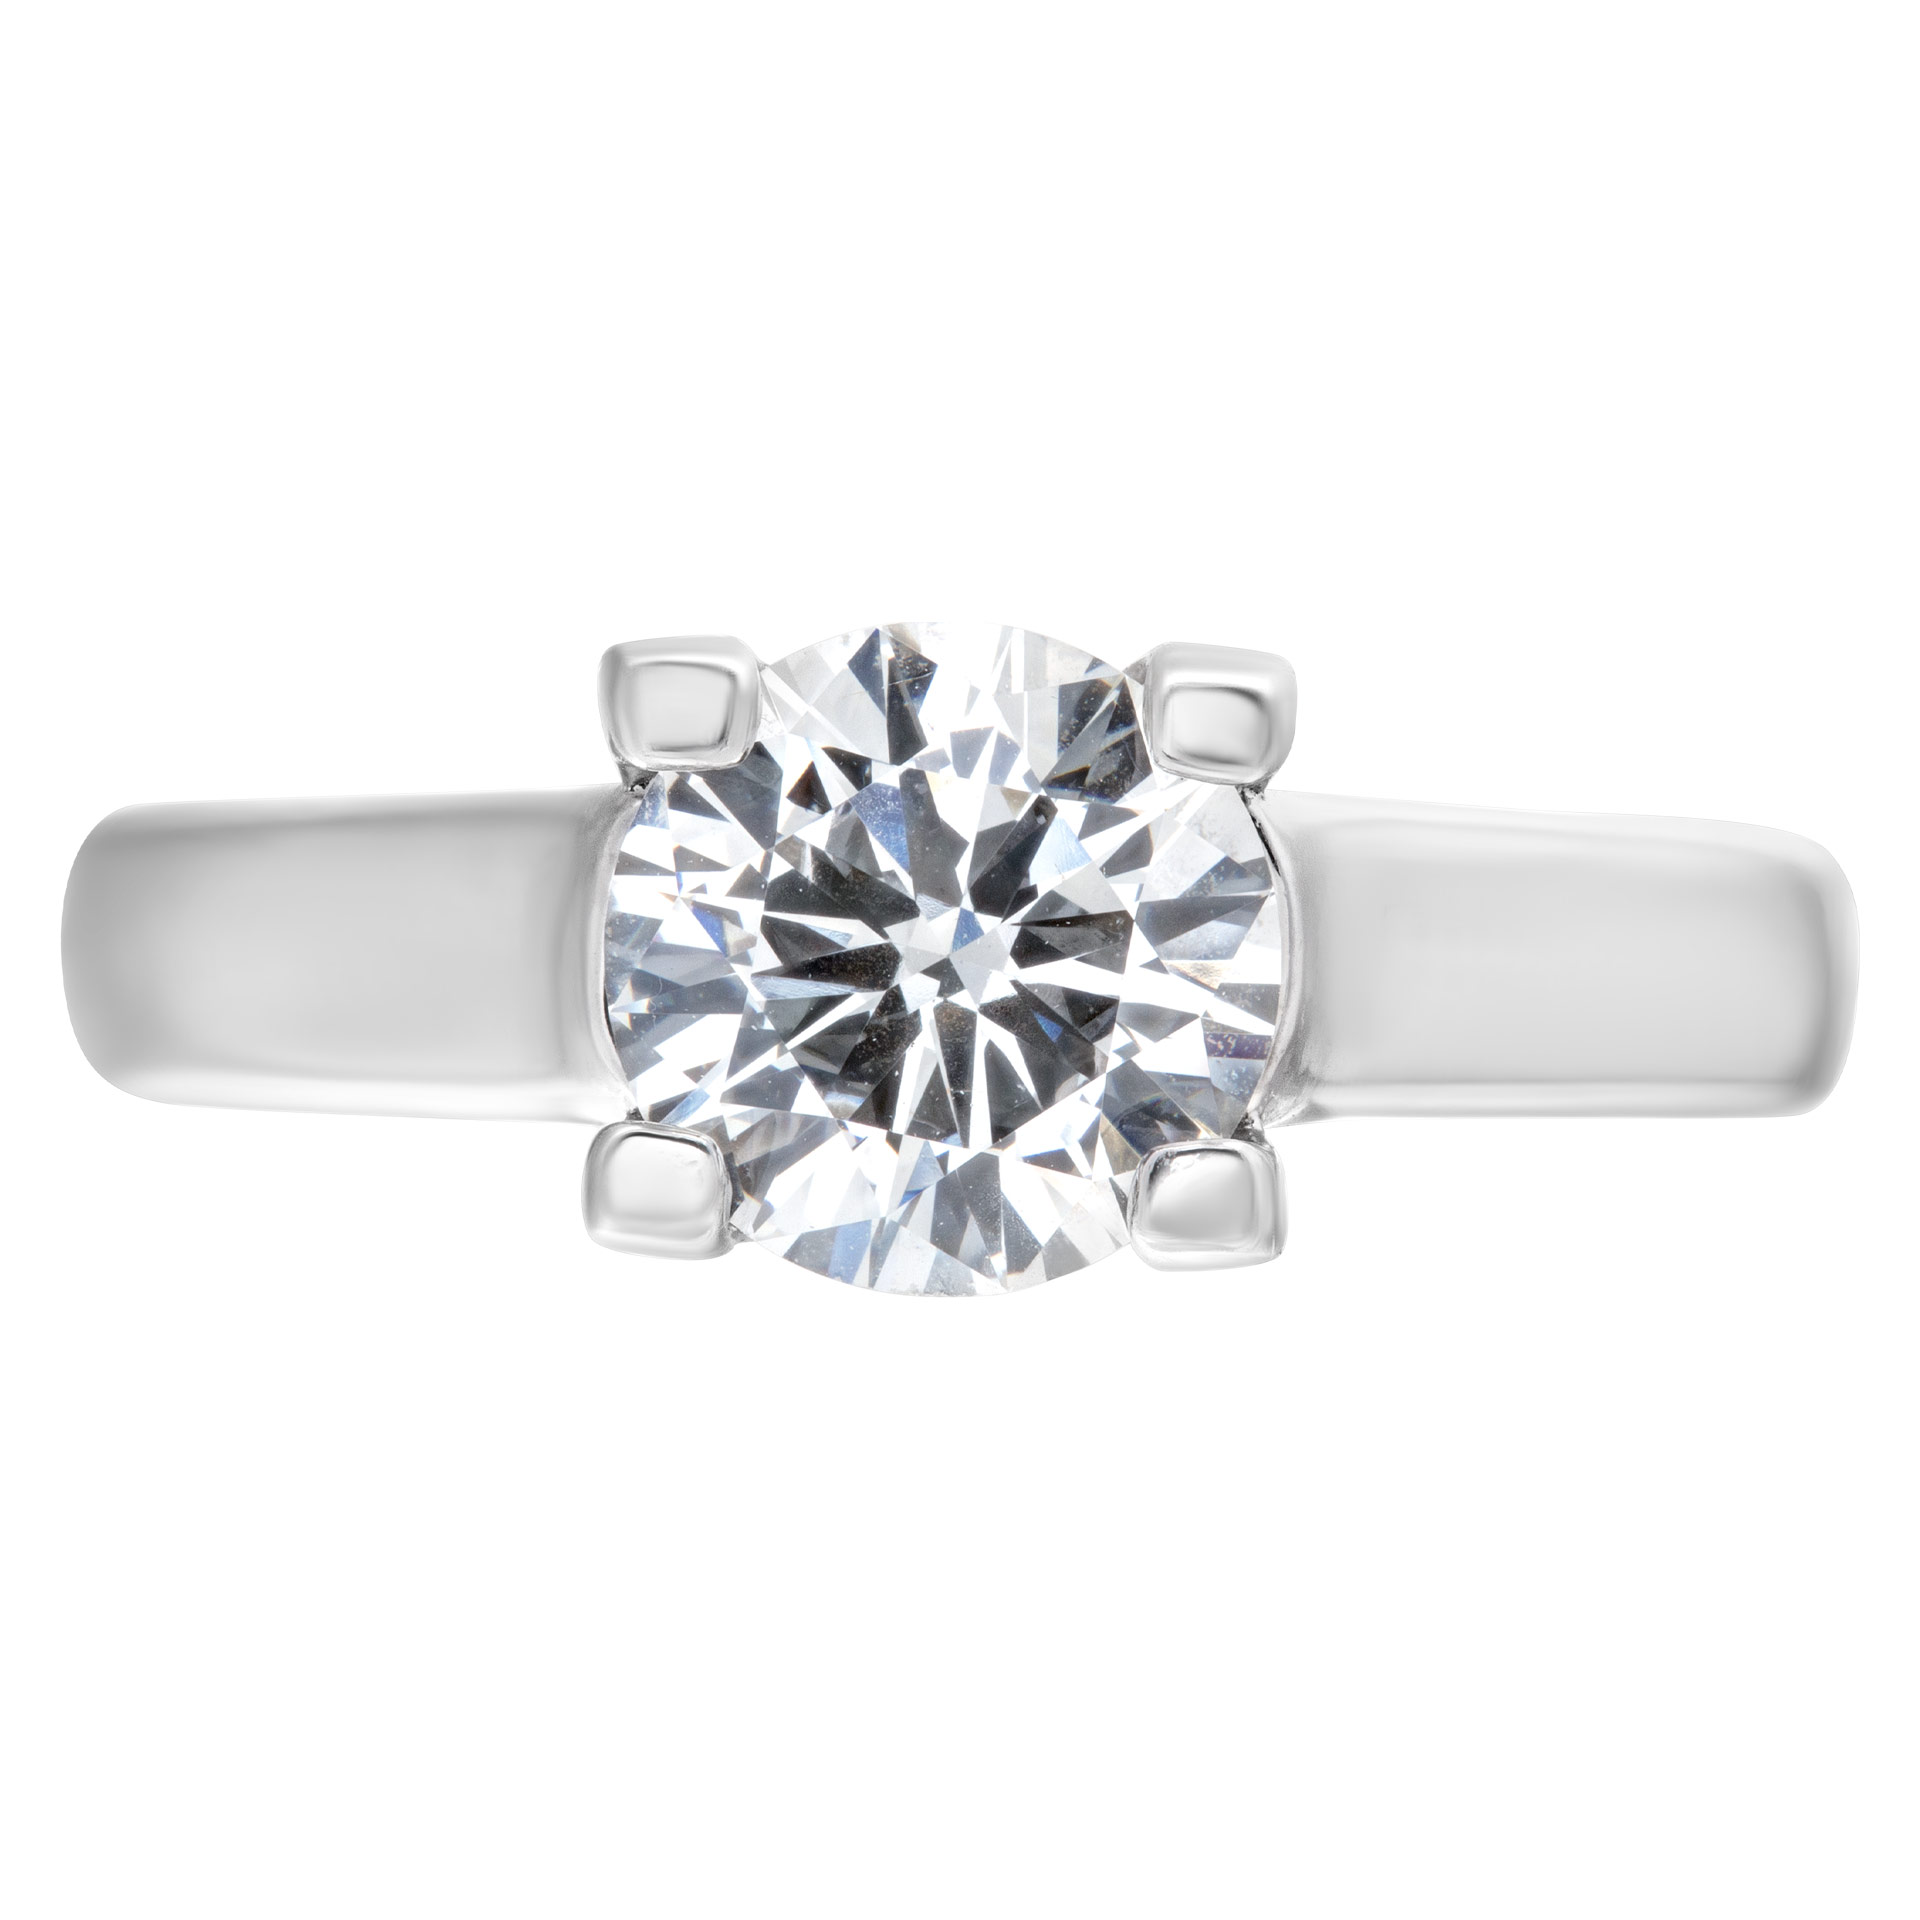 GIA certified round brilliant cut diamond 1.51 carat (I color, VS2 clarity) ring